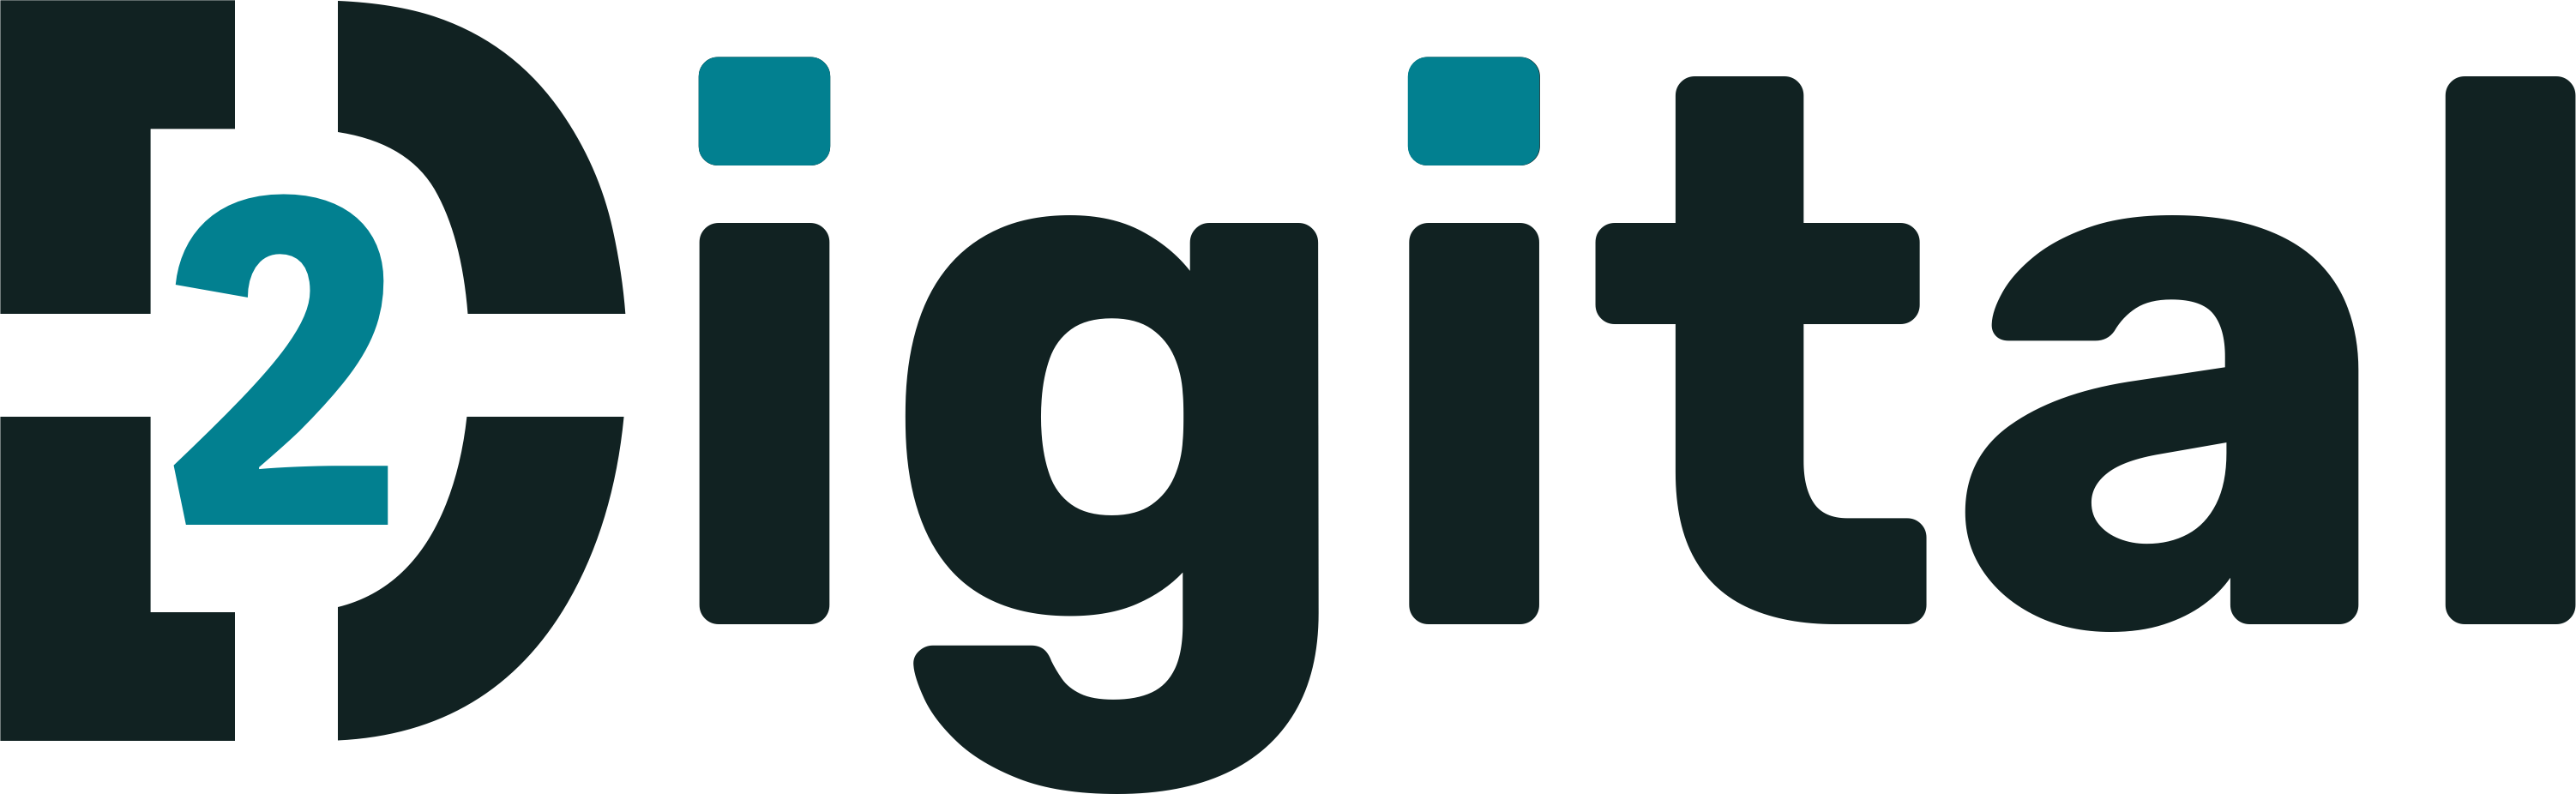 2 Digital logo